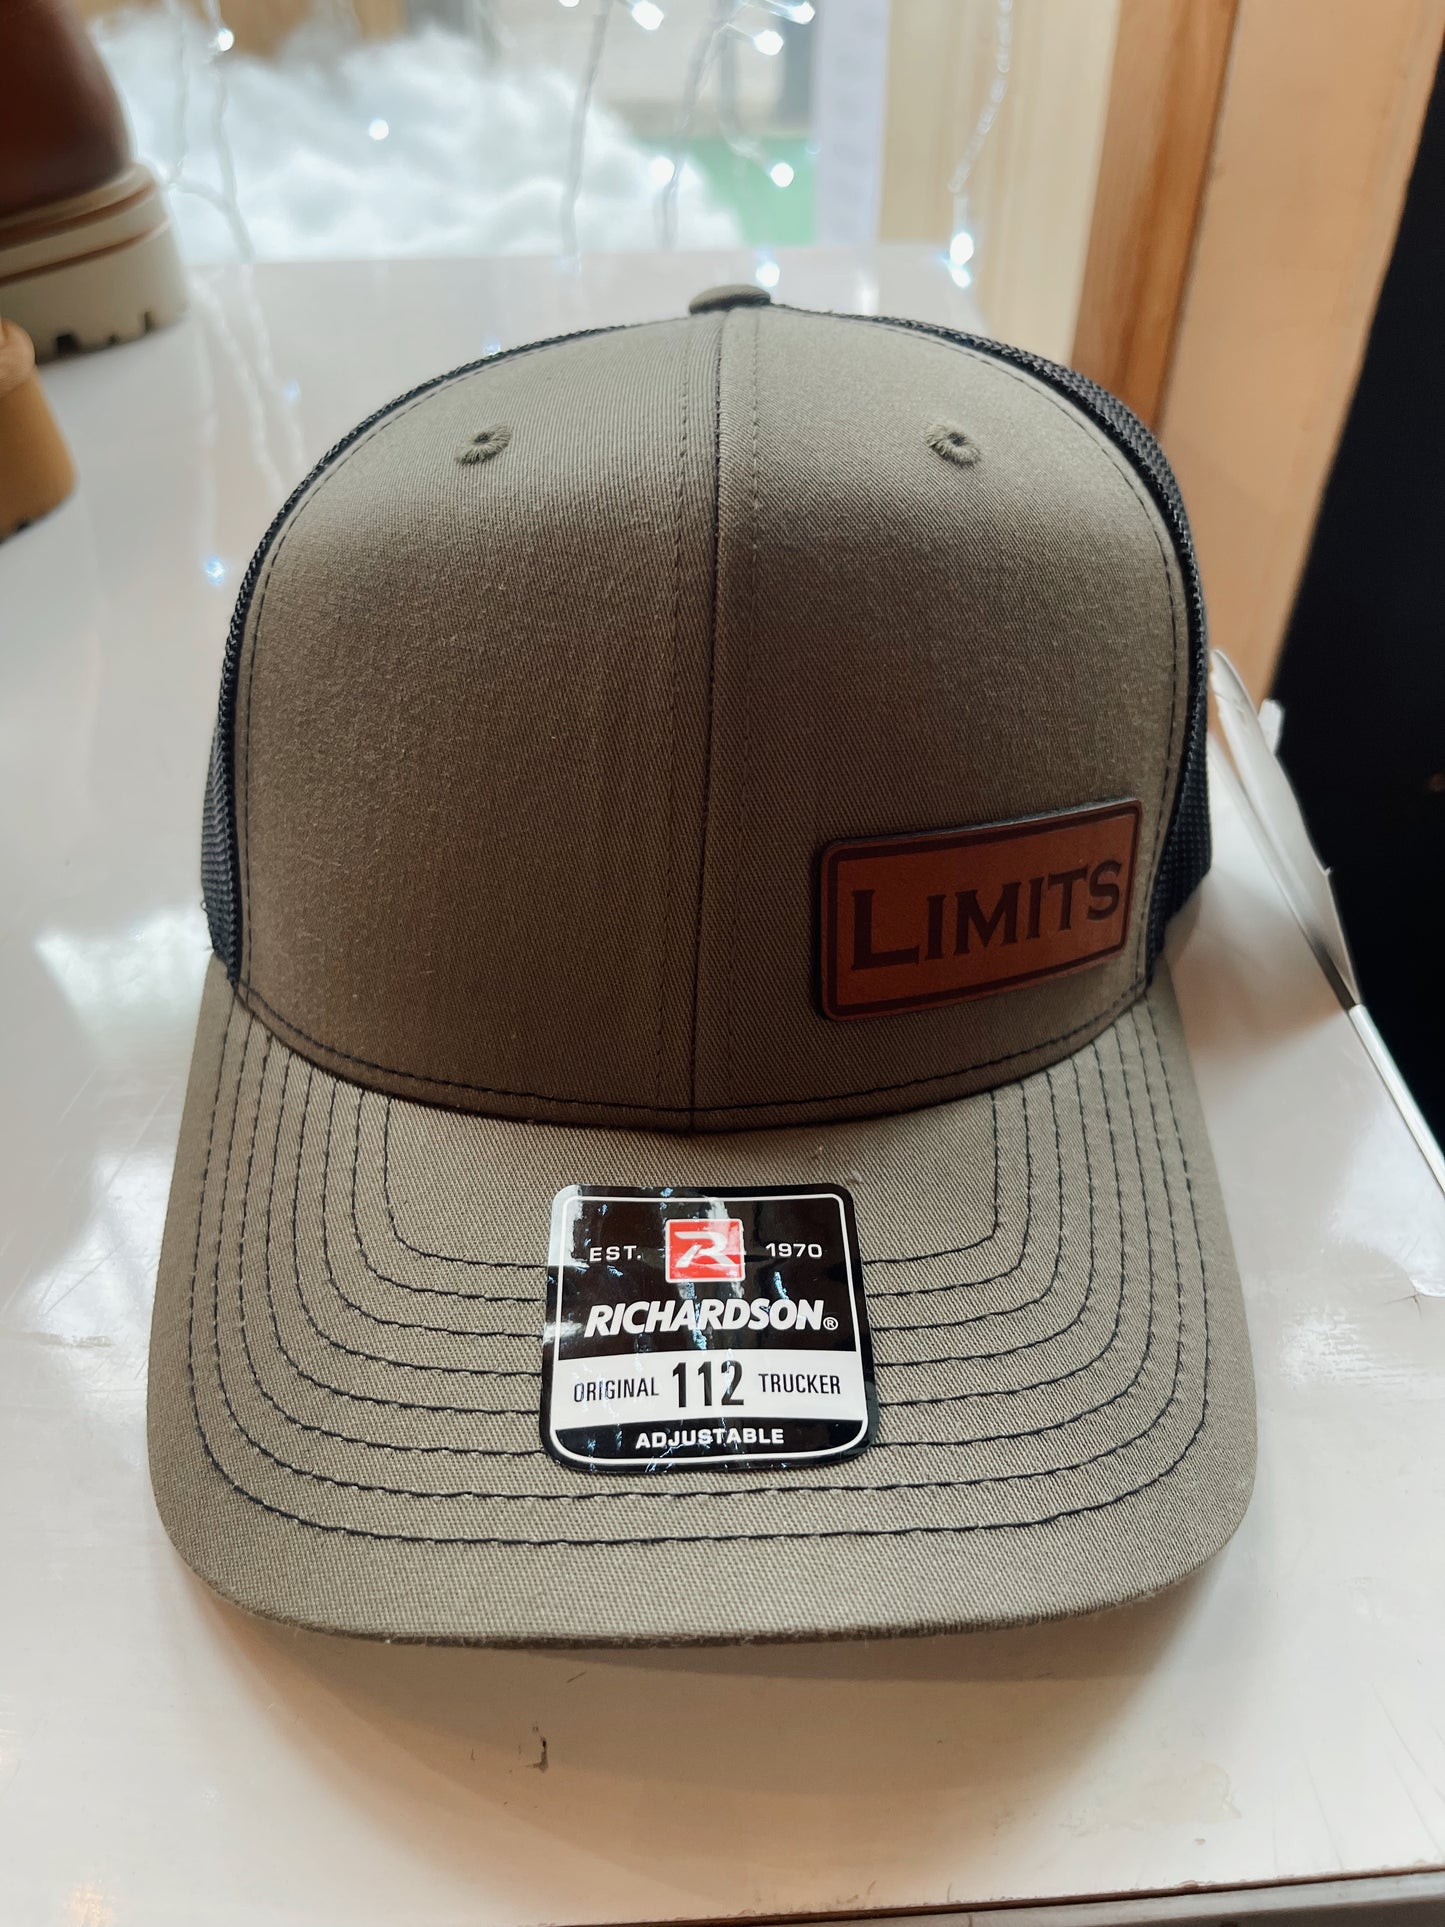 Limits hat